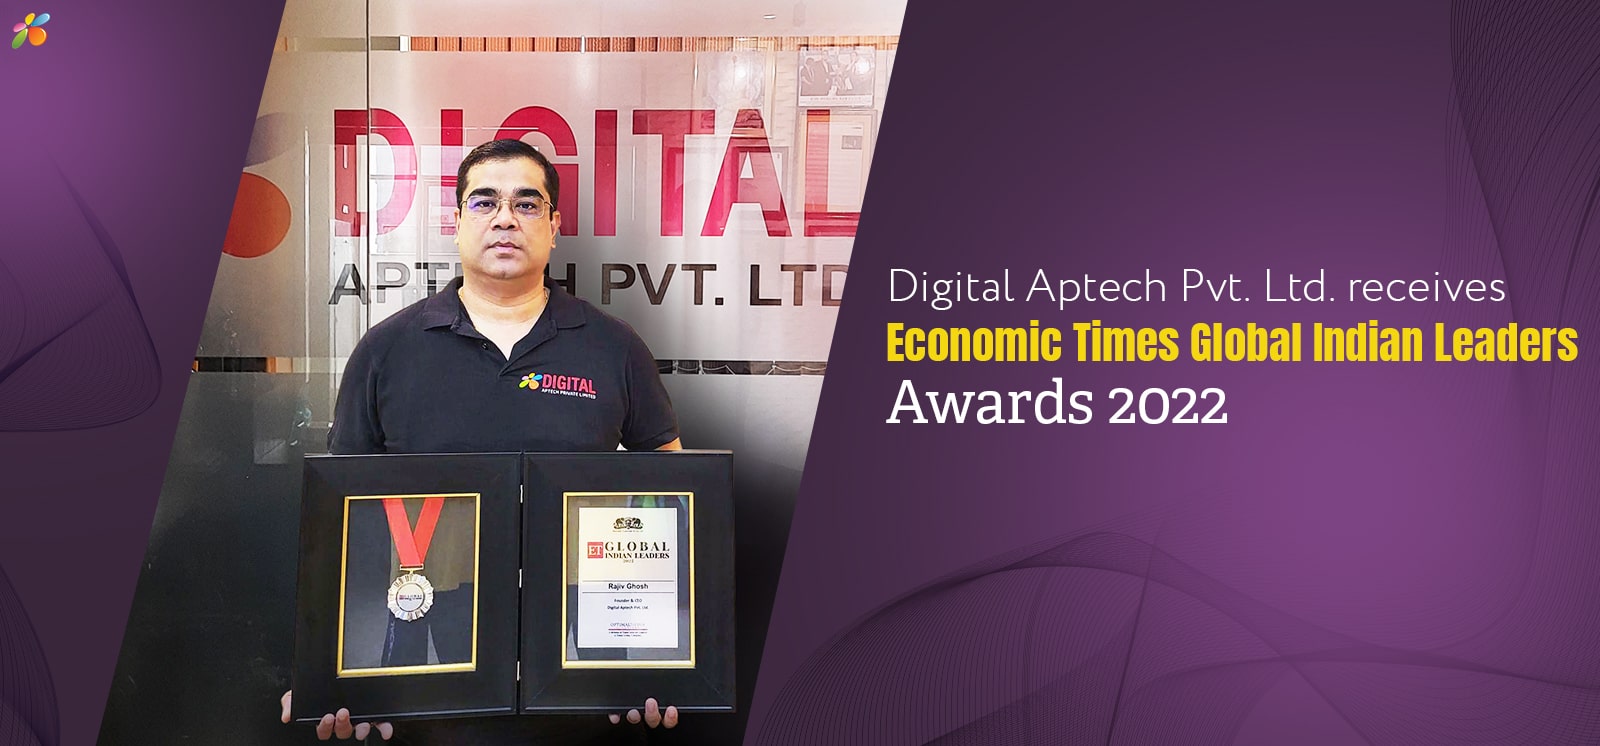 Digital Aptech Pvt. Ltd. receives Economic Times Global Indian Leaders Awards 2022